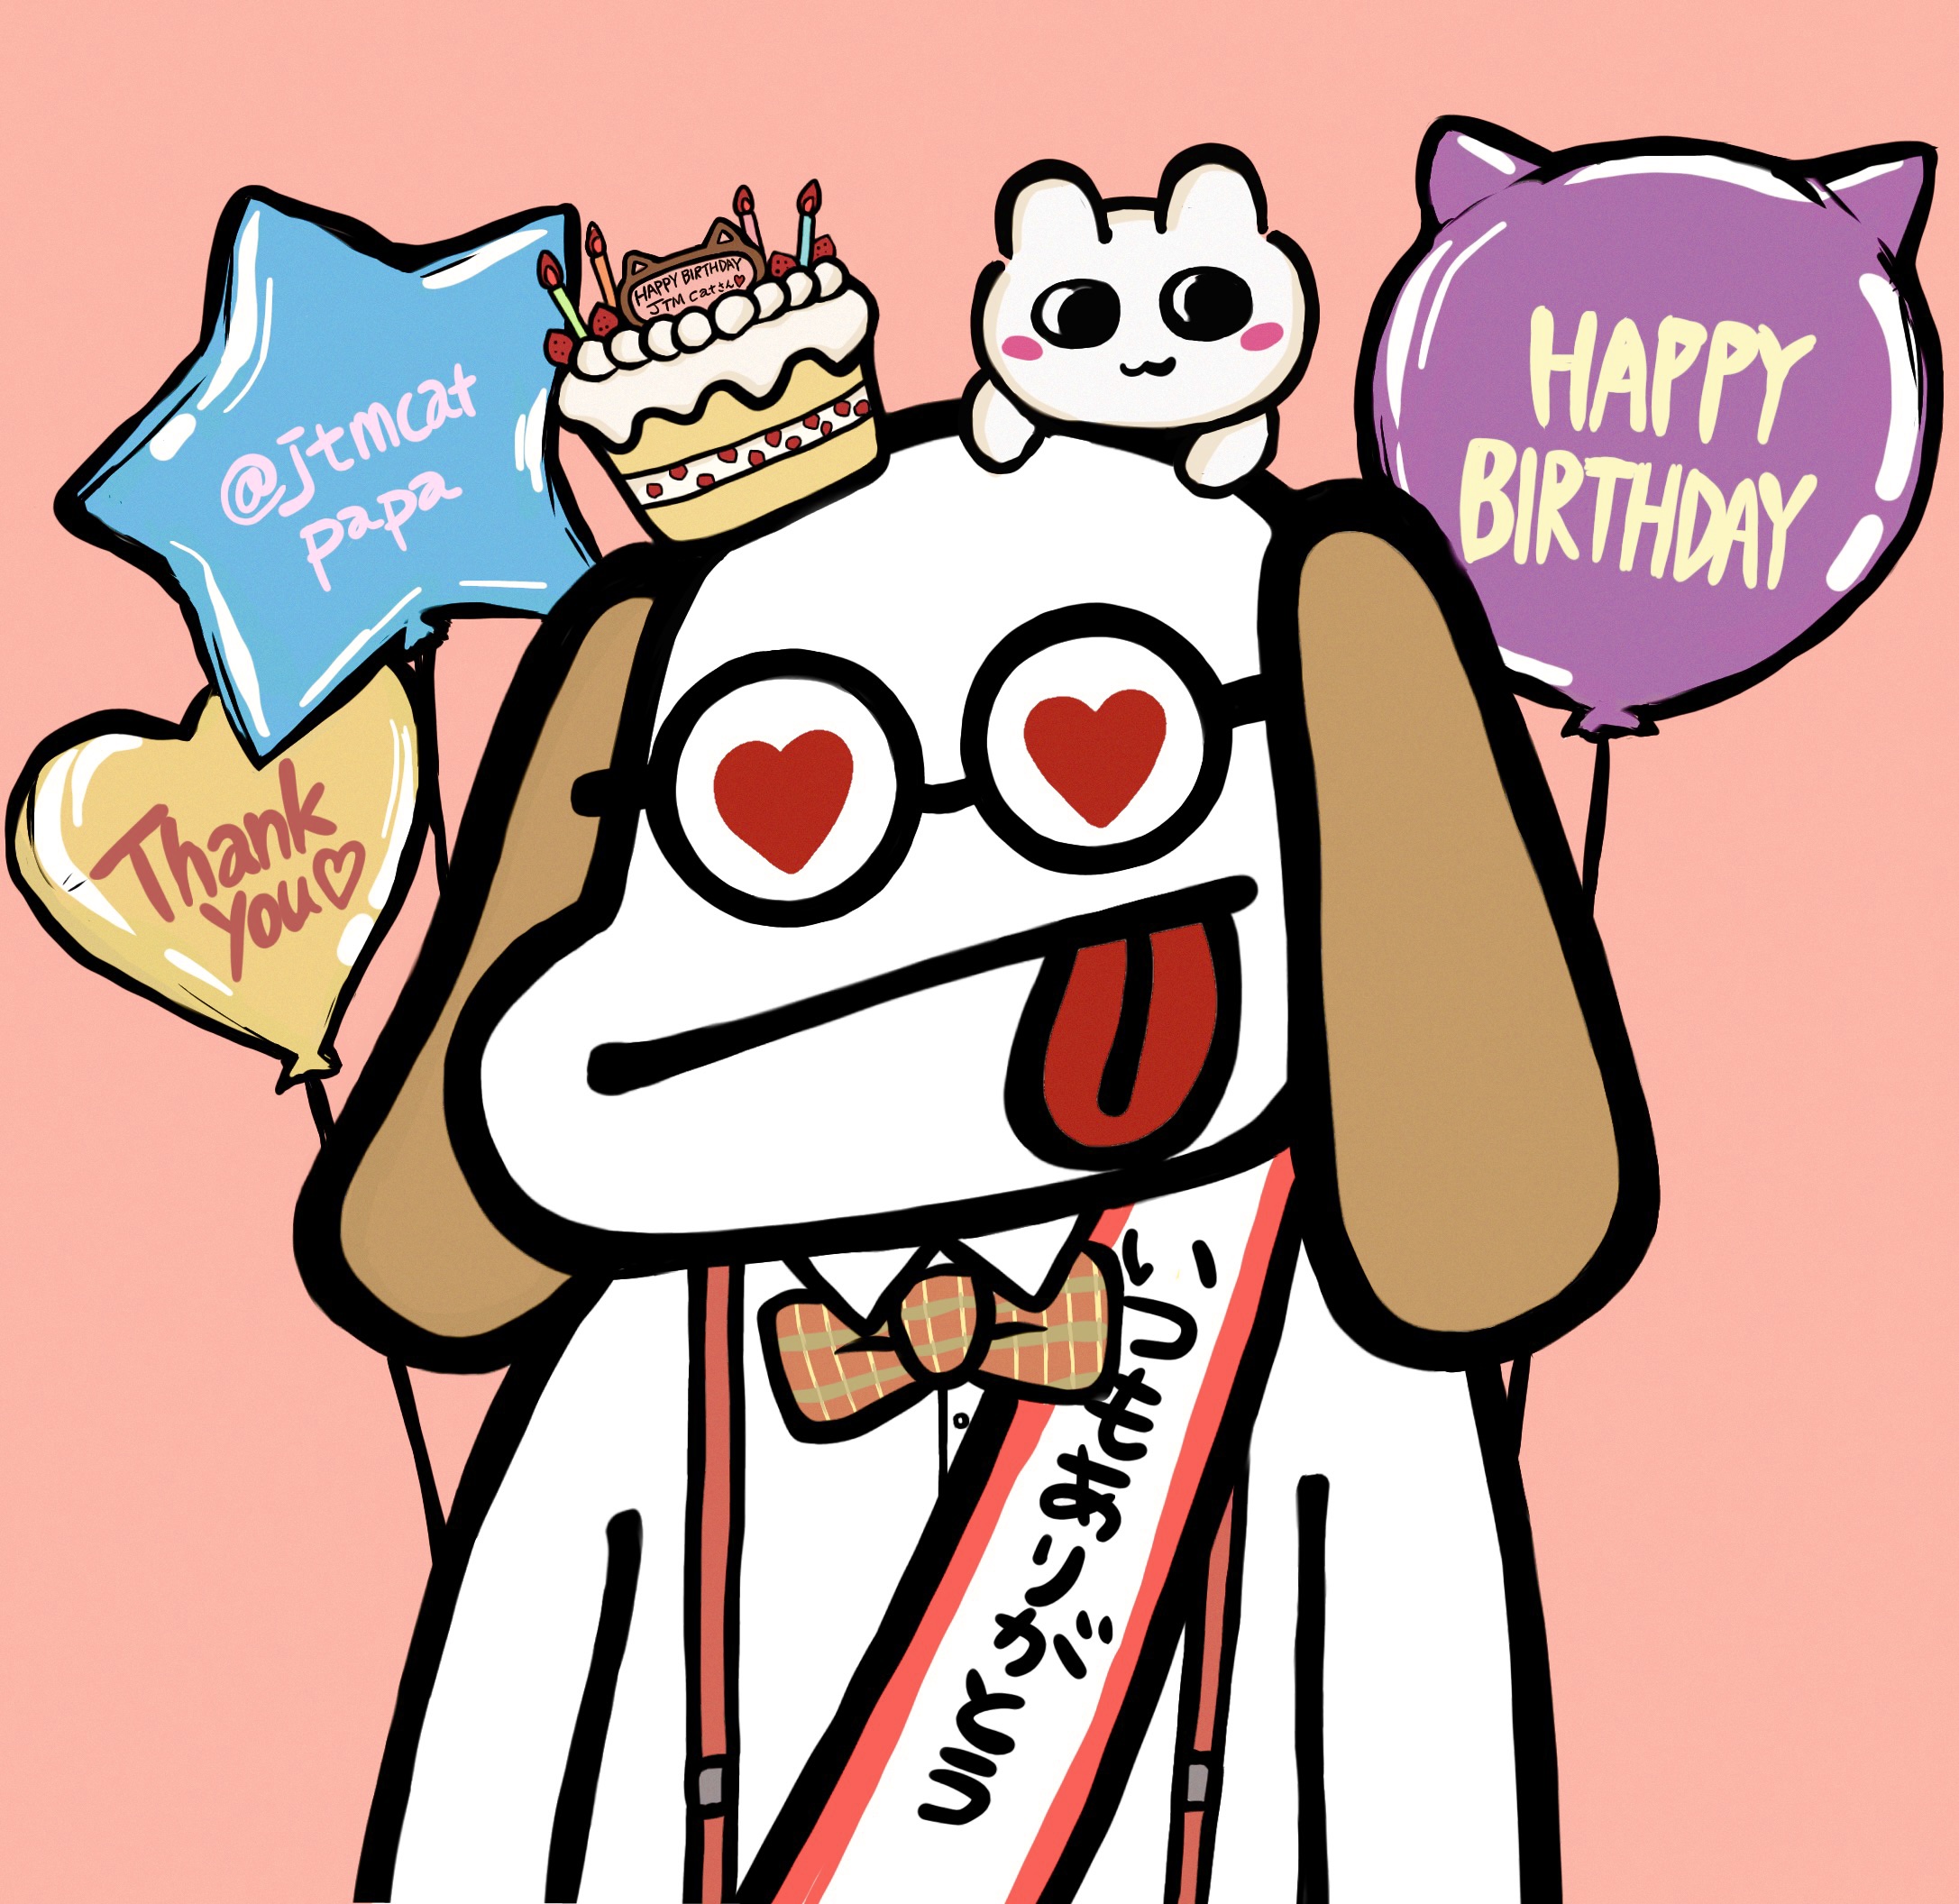 Happy Birthday to JTMcat♡